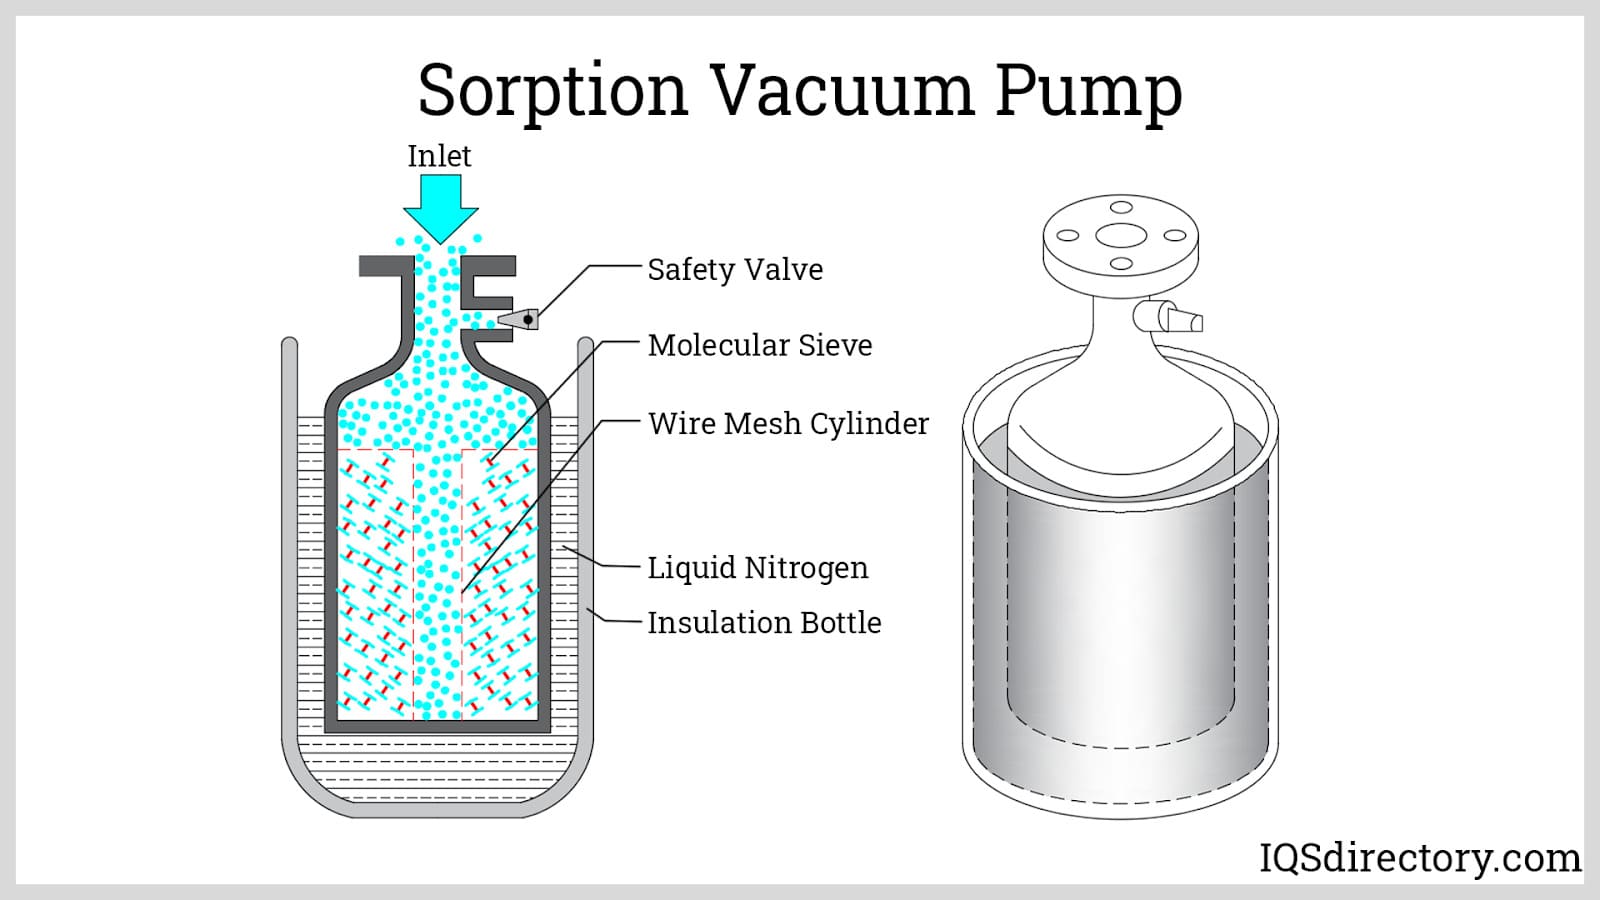 Sorption Vacuum Pump